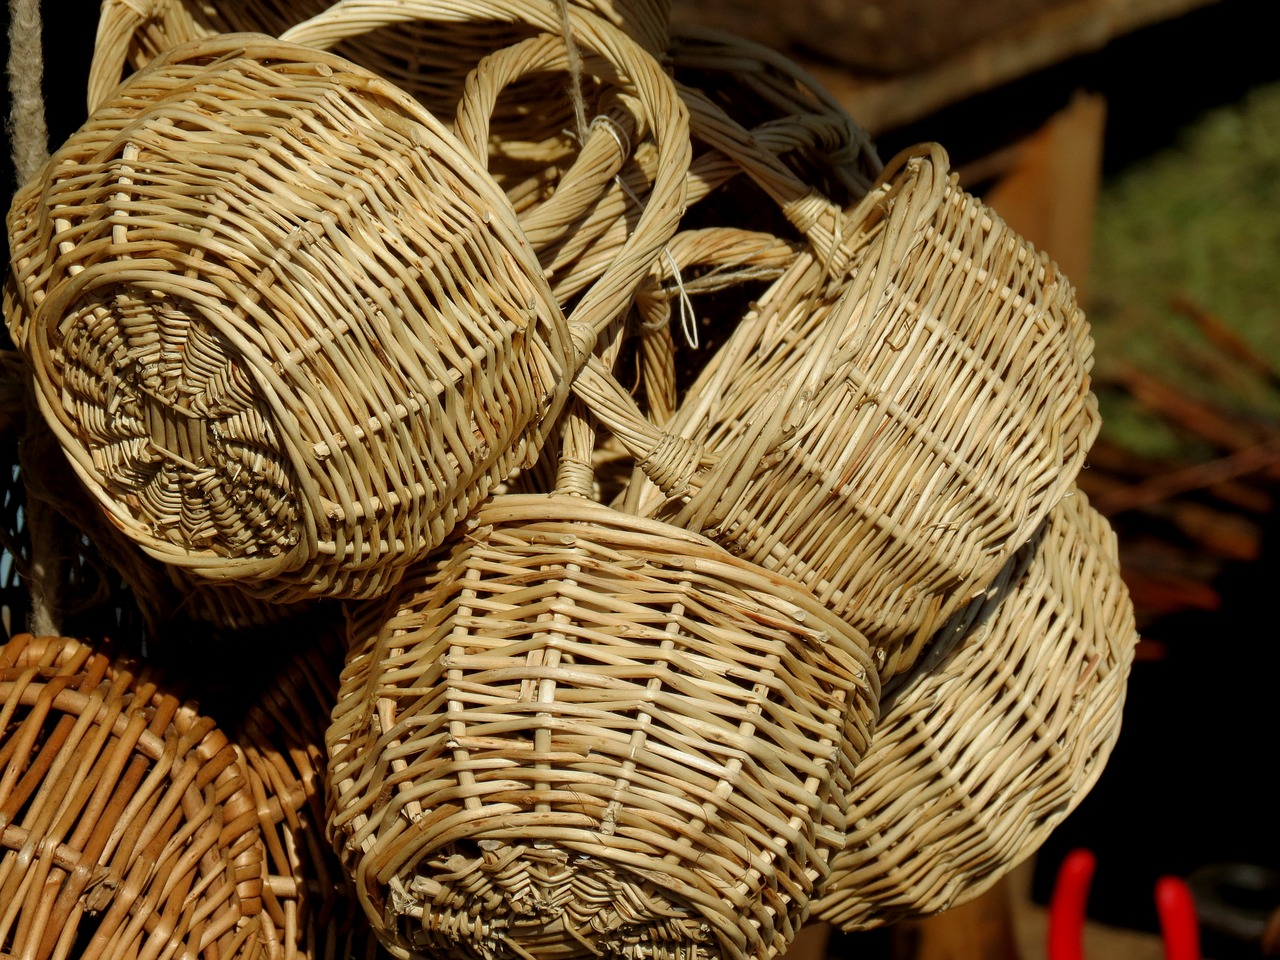 baskets craft sales stand free photo